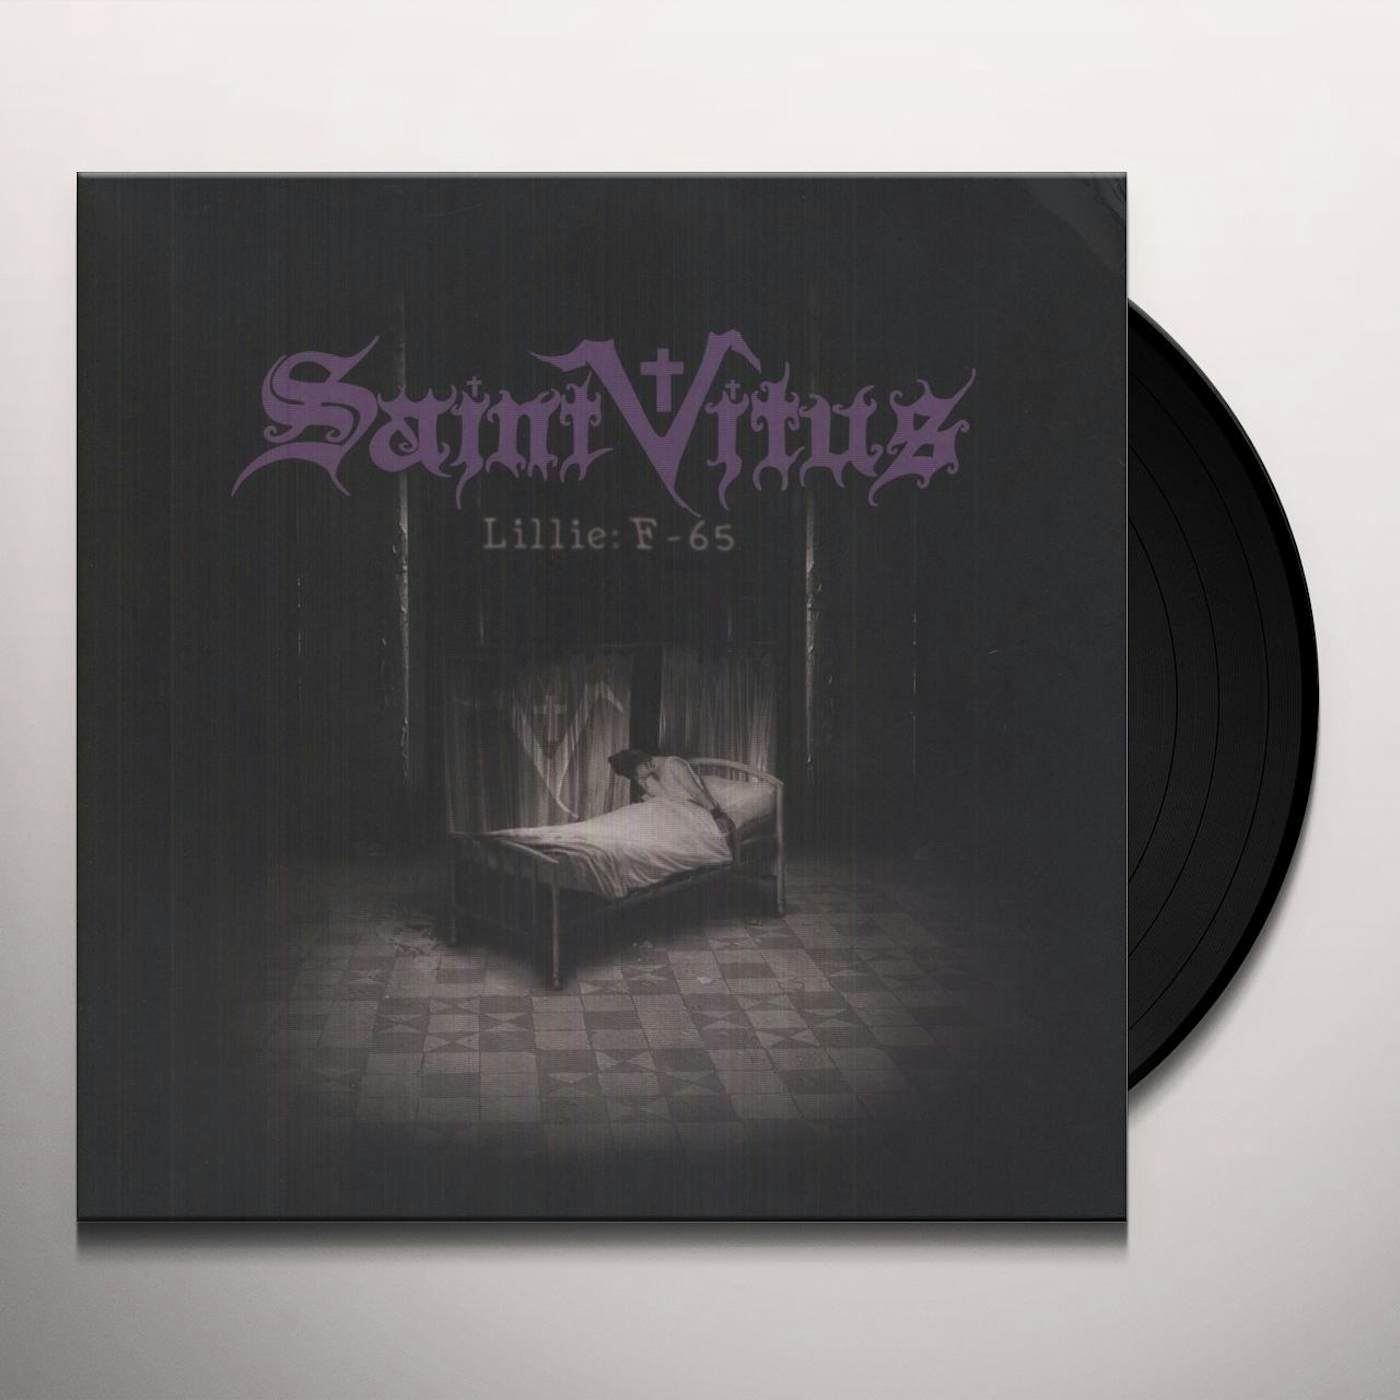 Saint Vitus LILLIE: F-65 (Vinyl)